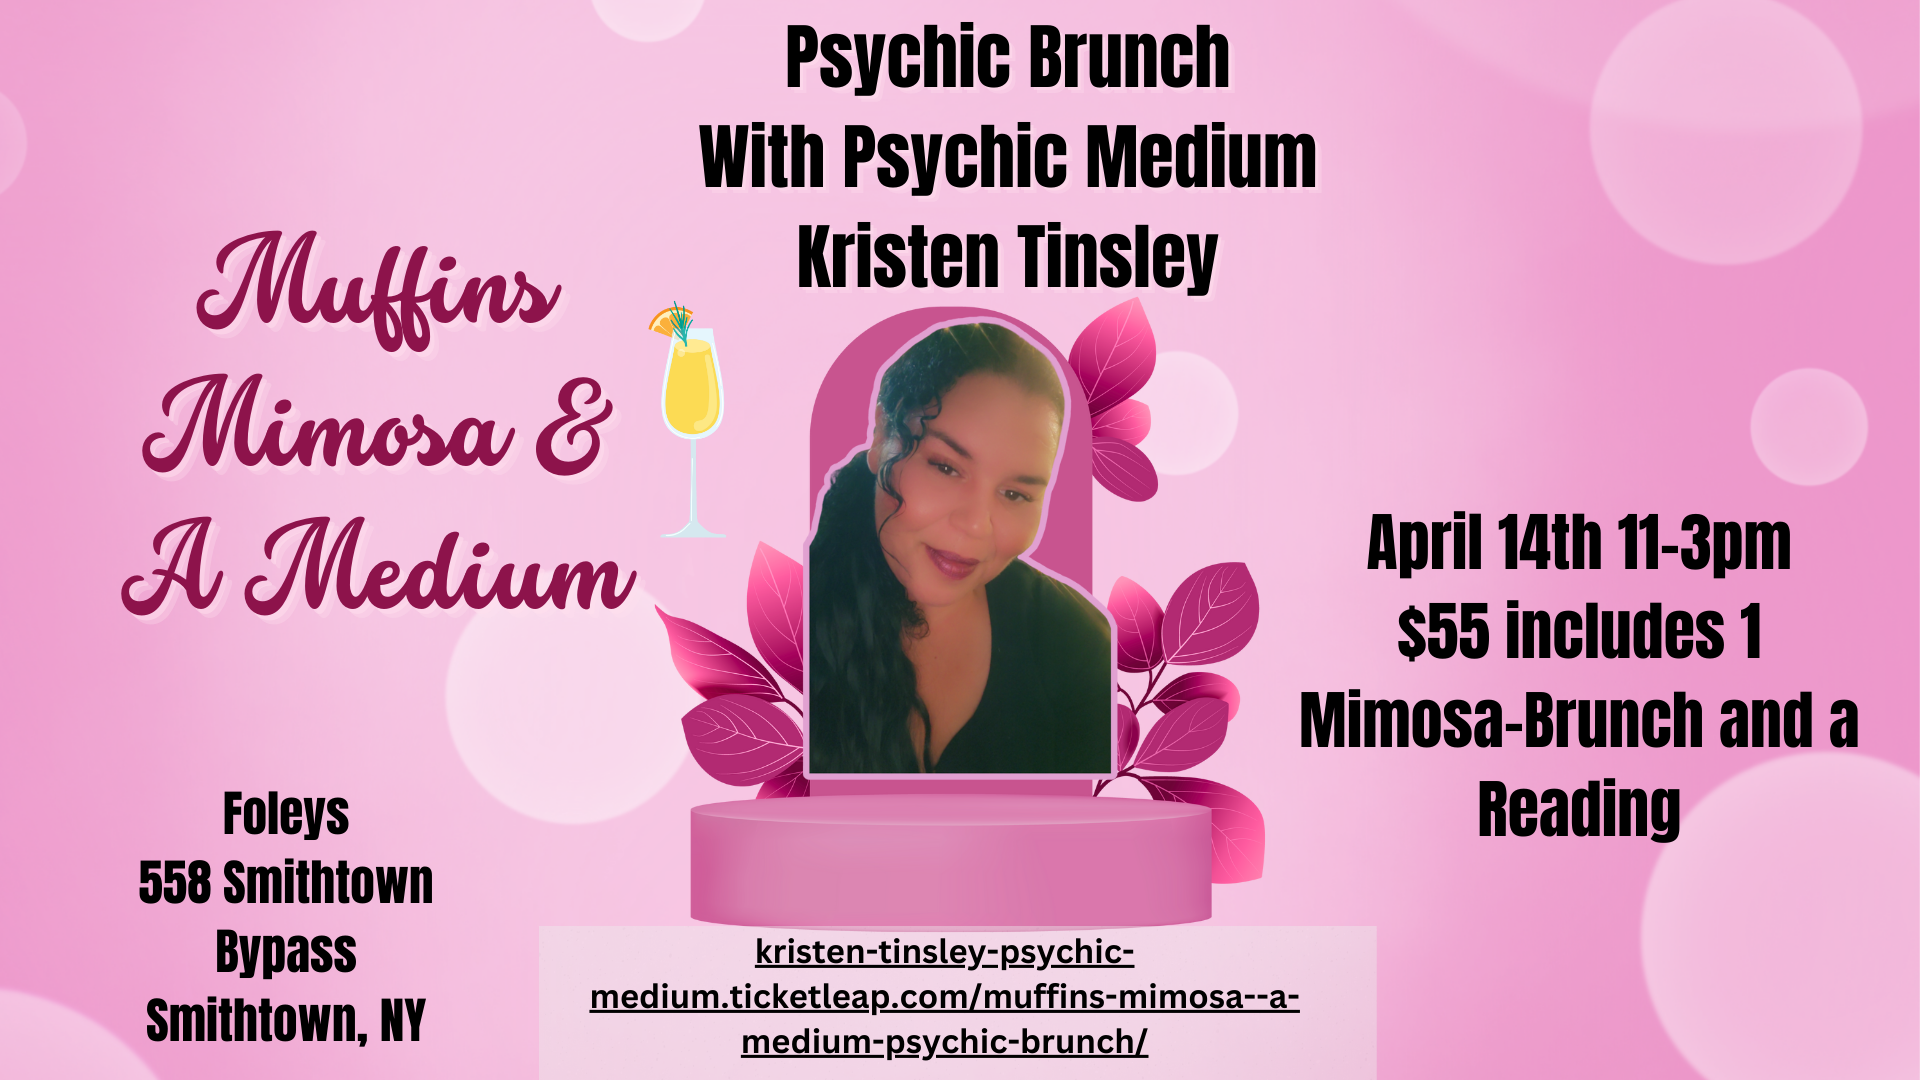 Psychic Brunch With Psychic Medium Kristen Tinsley